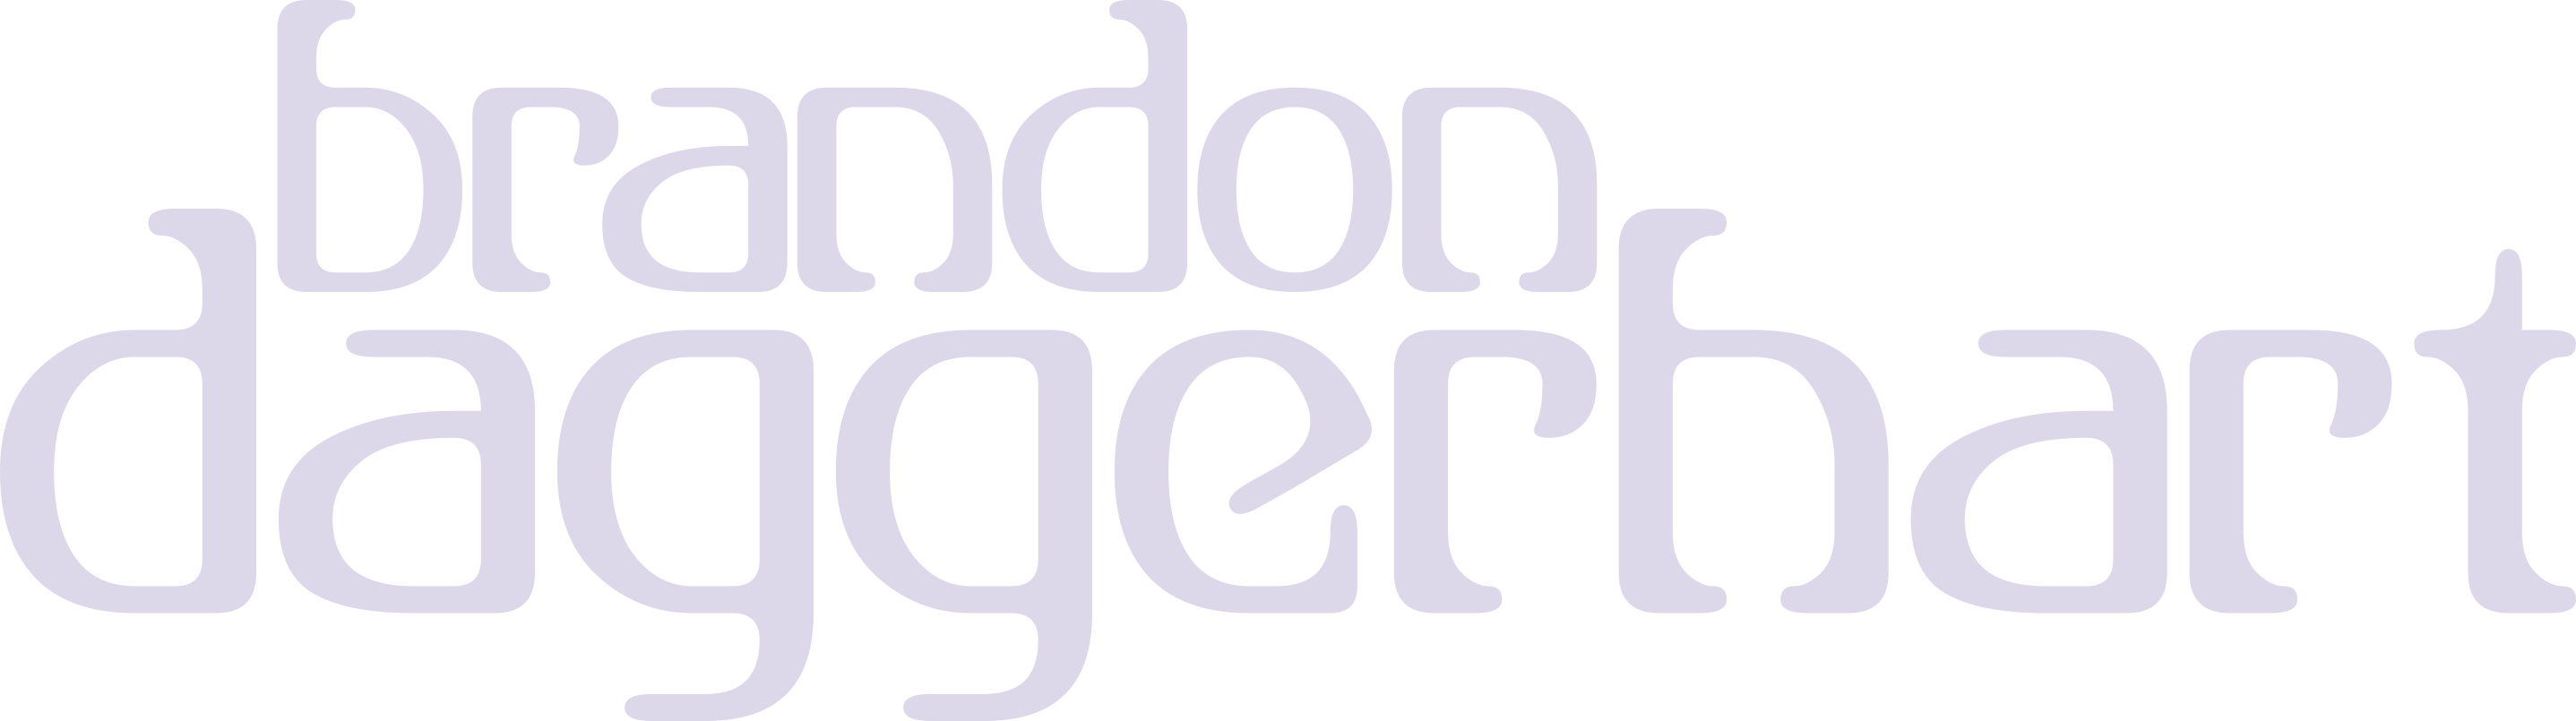 Brandon Daggerhart logo